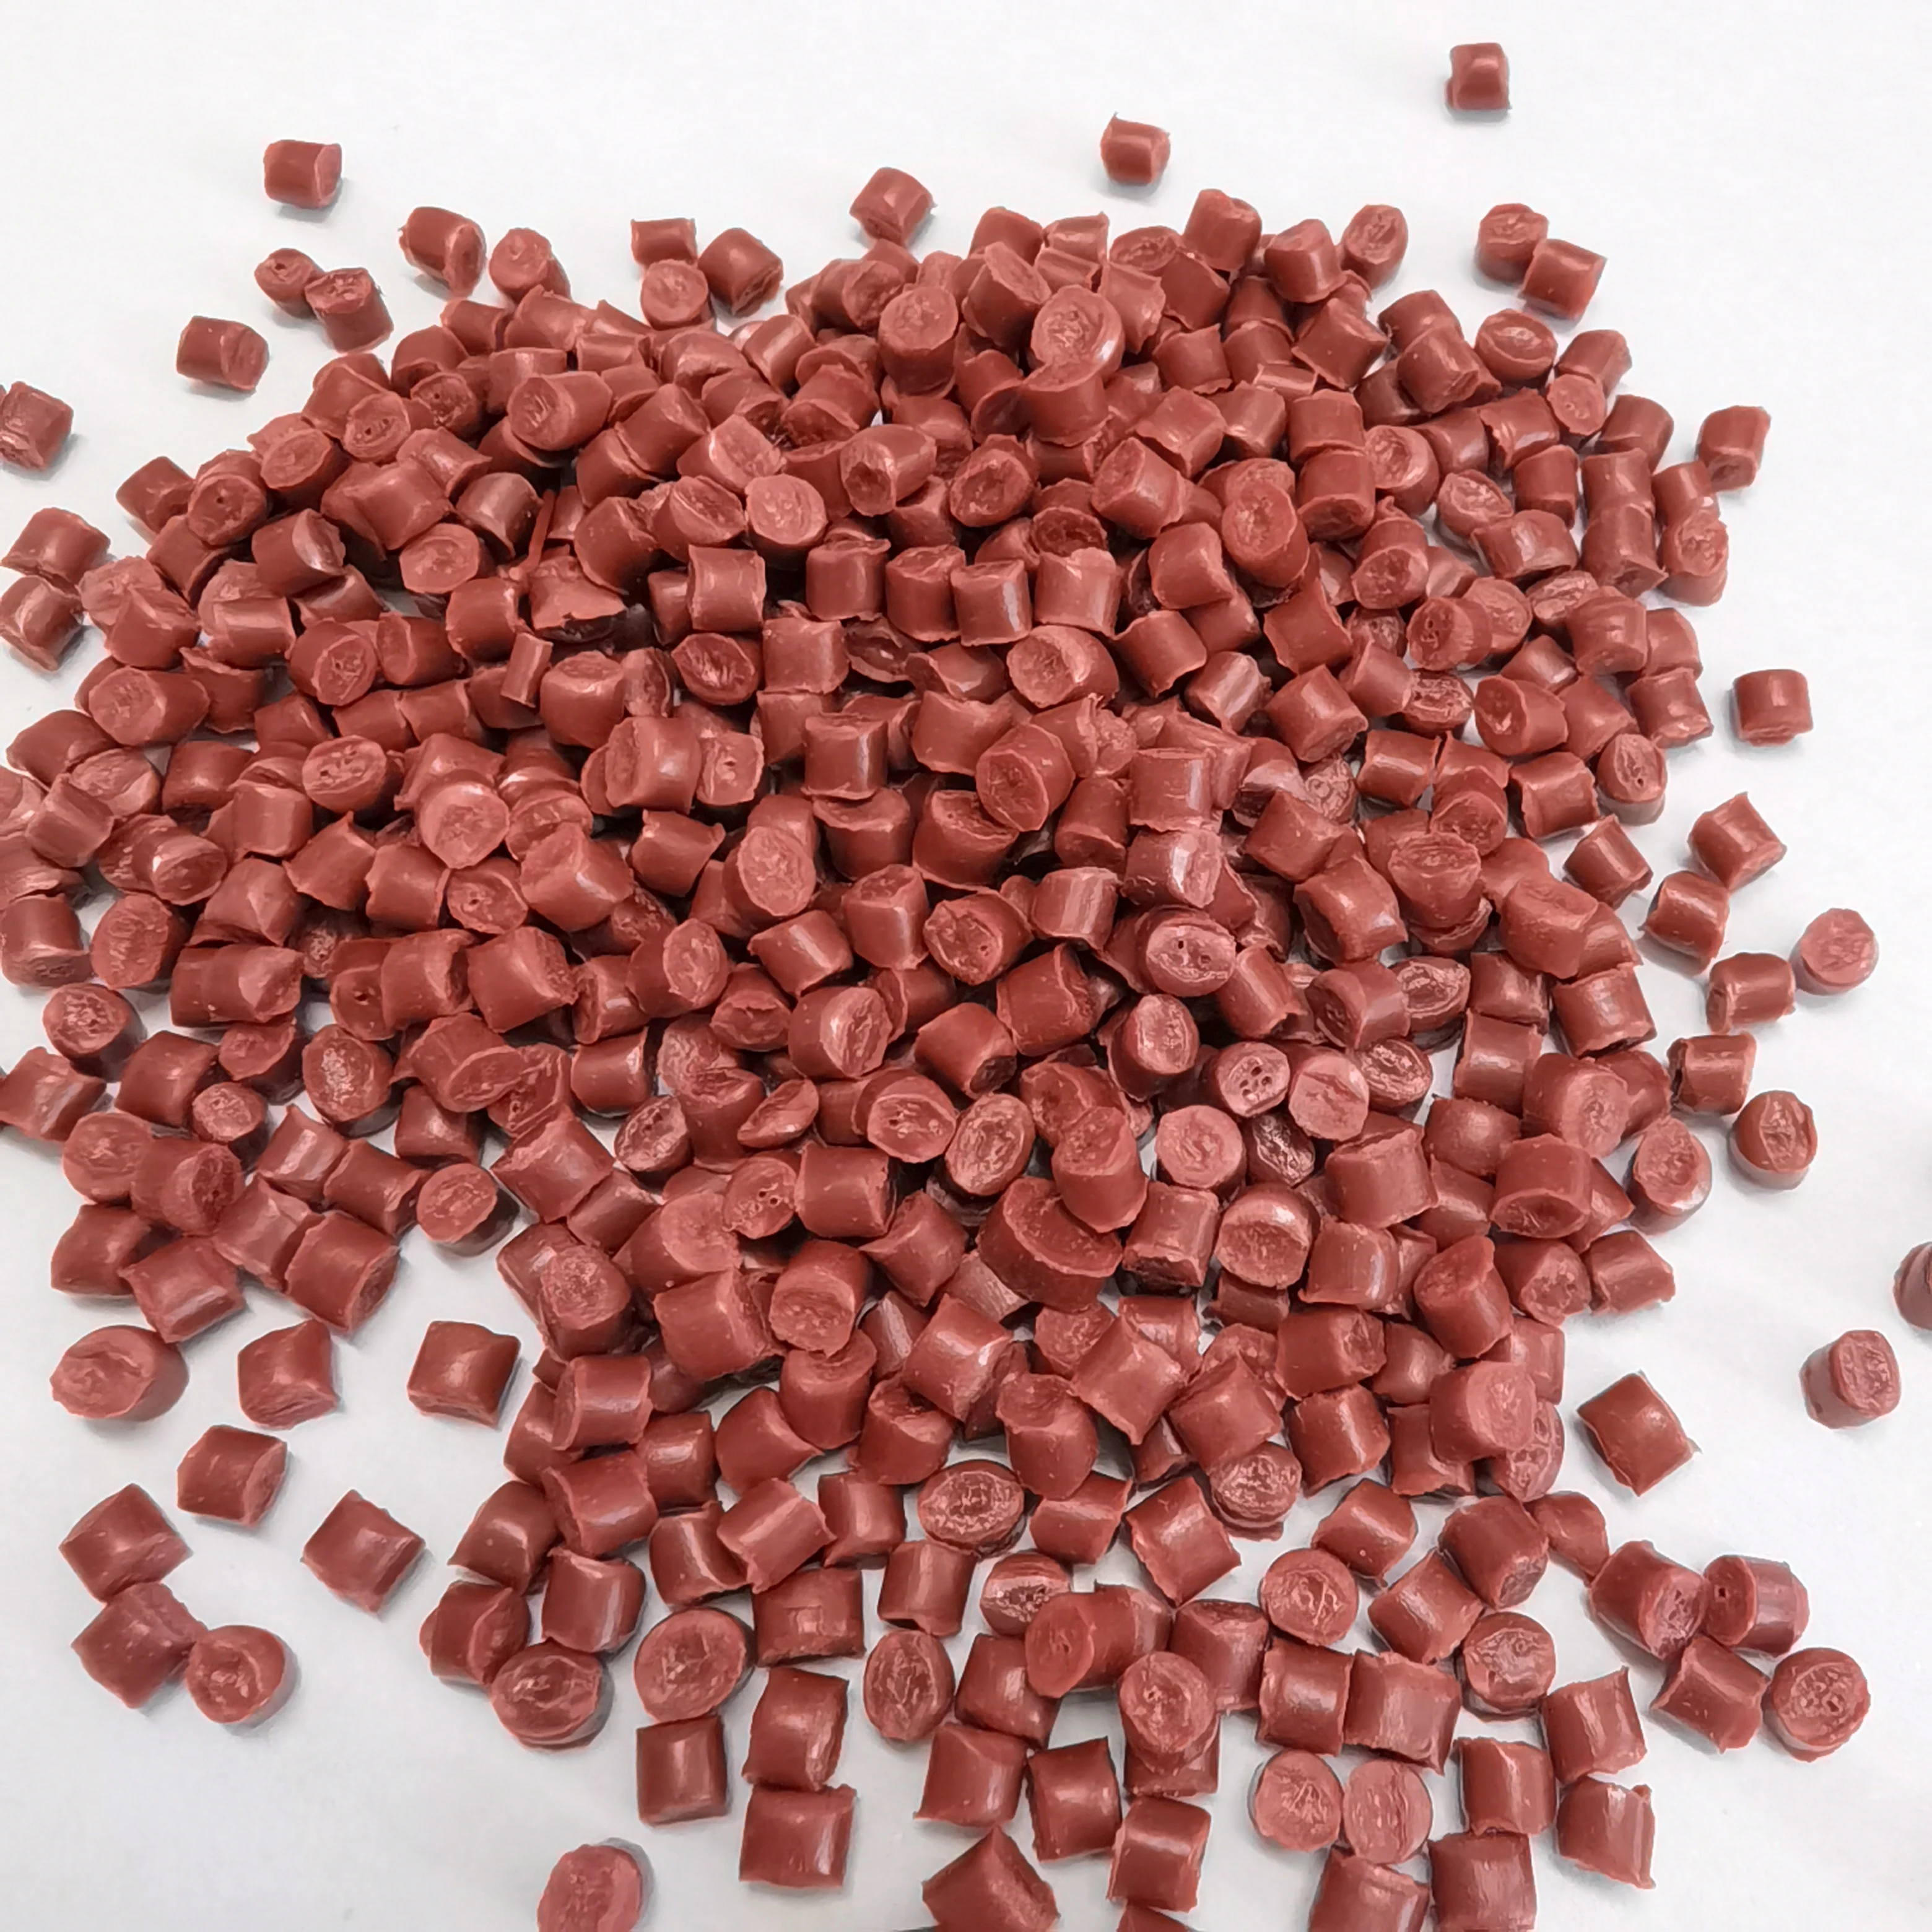 plastic raw materials prices china trade pp polypropylene scrap virgin pp recycled polypropylene